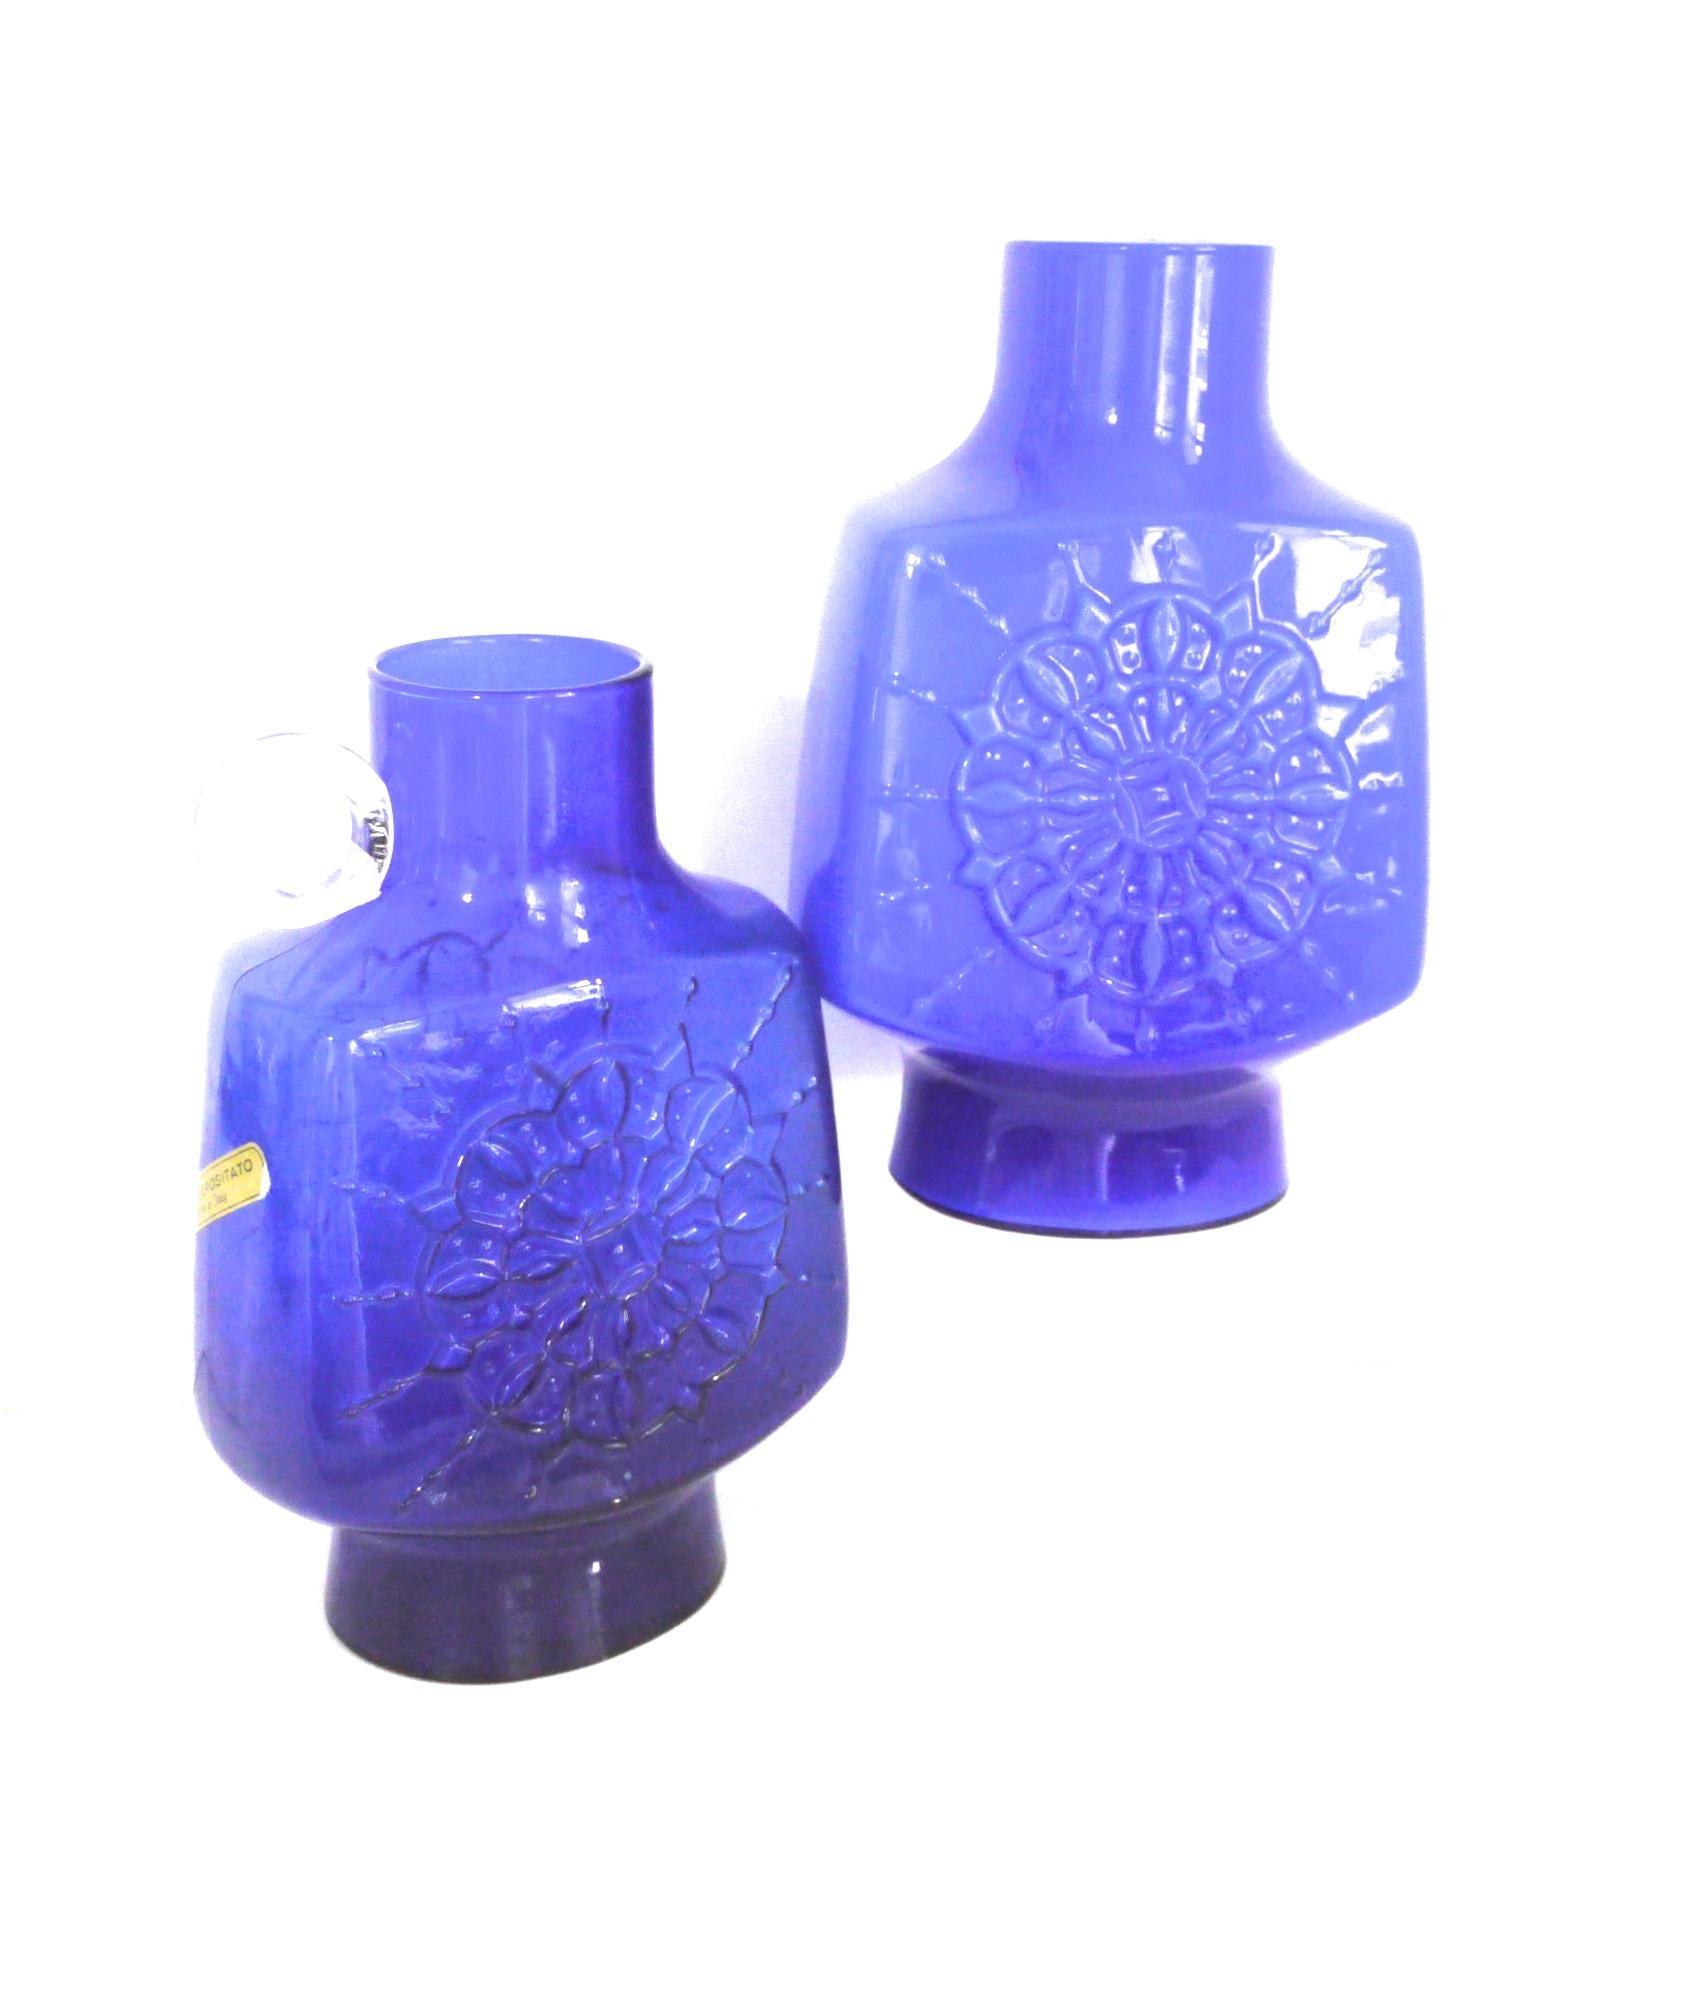 Art Glass Pair of Empoli Stelvia Vases from Wayne Husted of Blenko Original Label, 1960s For Sale